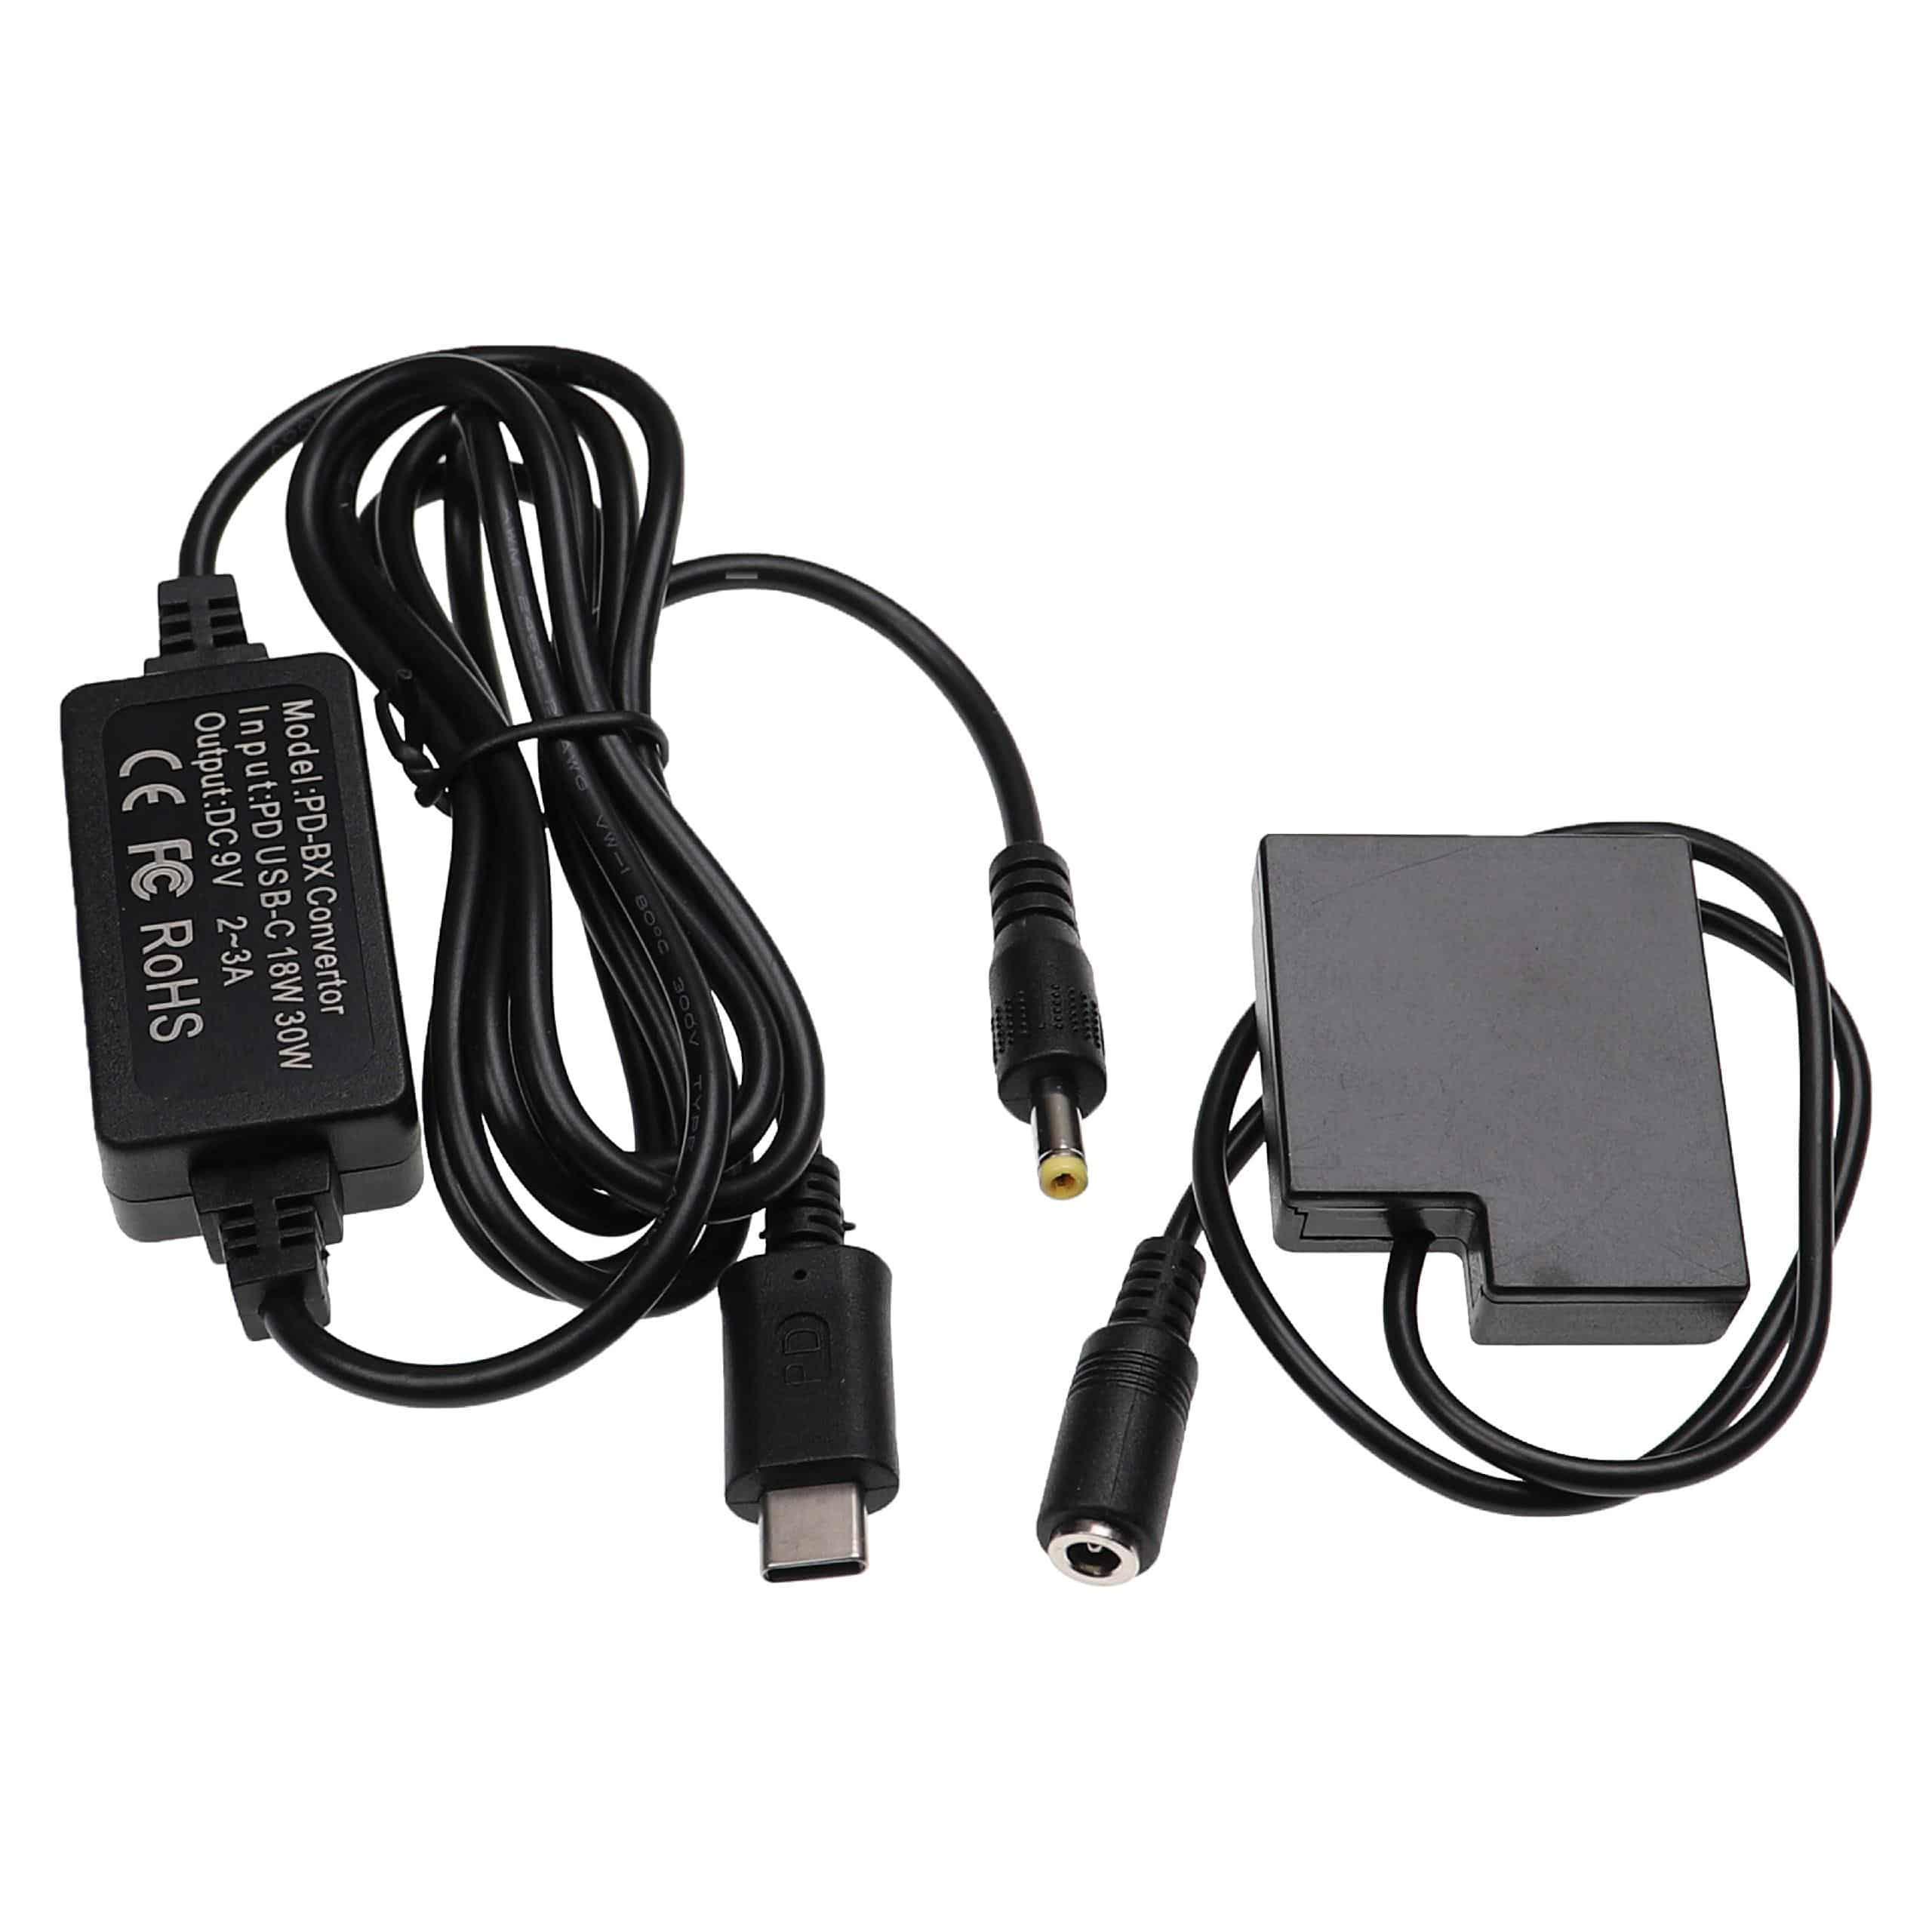 Fuente alimentación USB reemplaza Panasonic DMW-AC8 para cámaras + acoplador CC reemplaza Panasonic DMW-DCC15